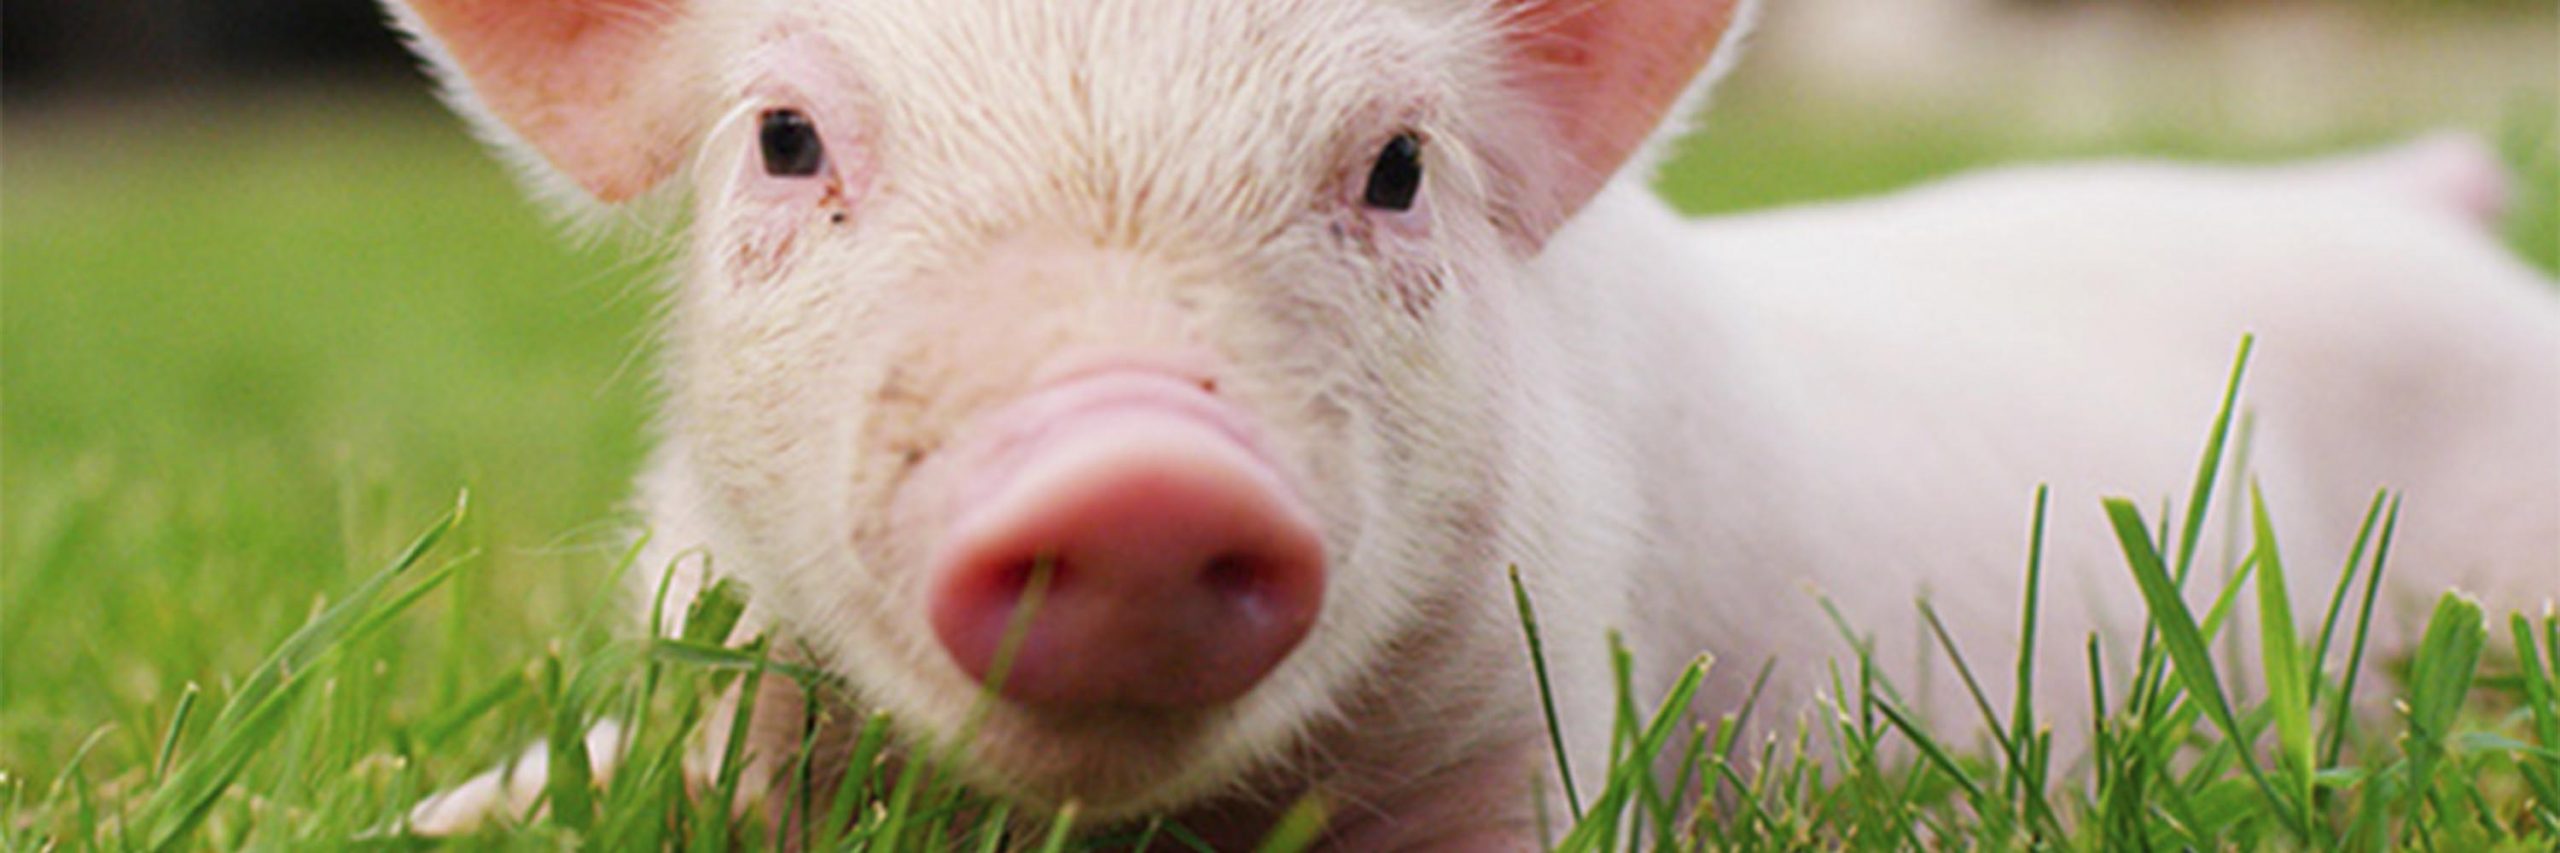 Pink,Grass,Snout,Domestic pig,farmed animal,Dish,Landscape